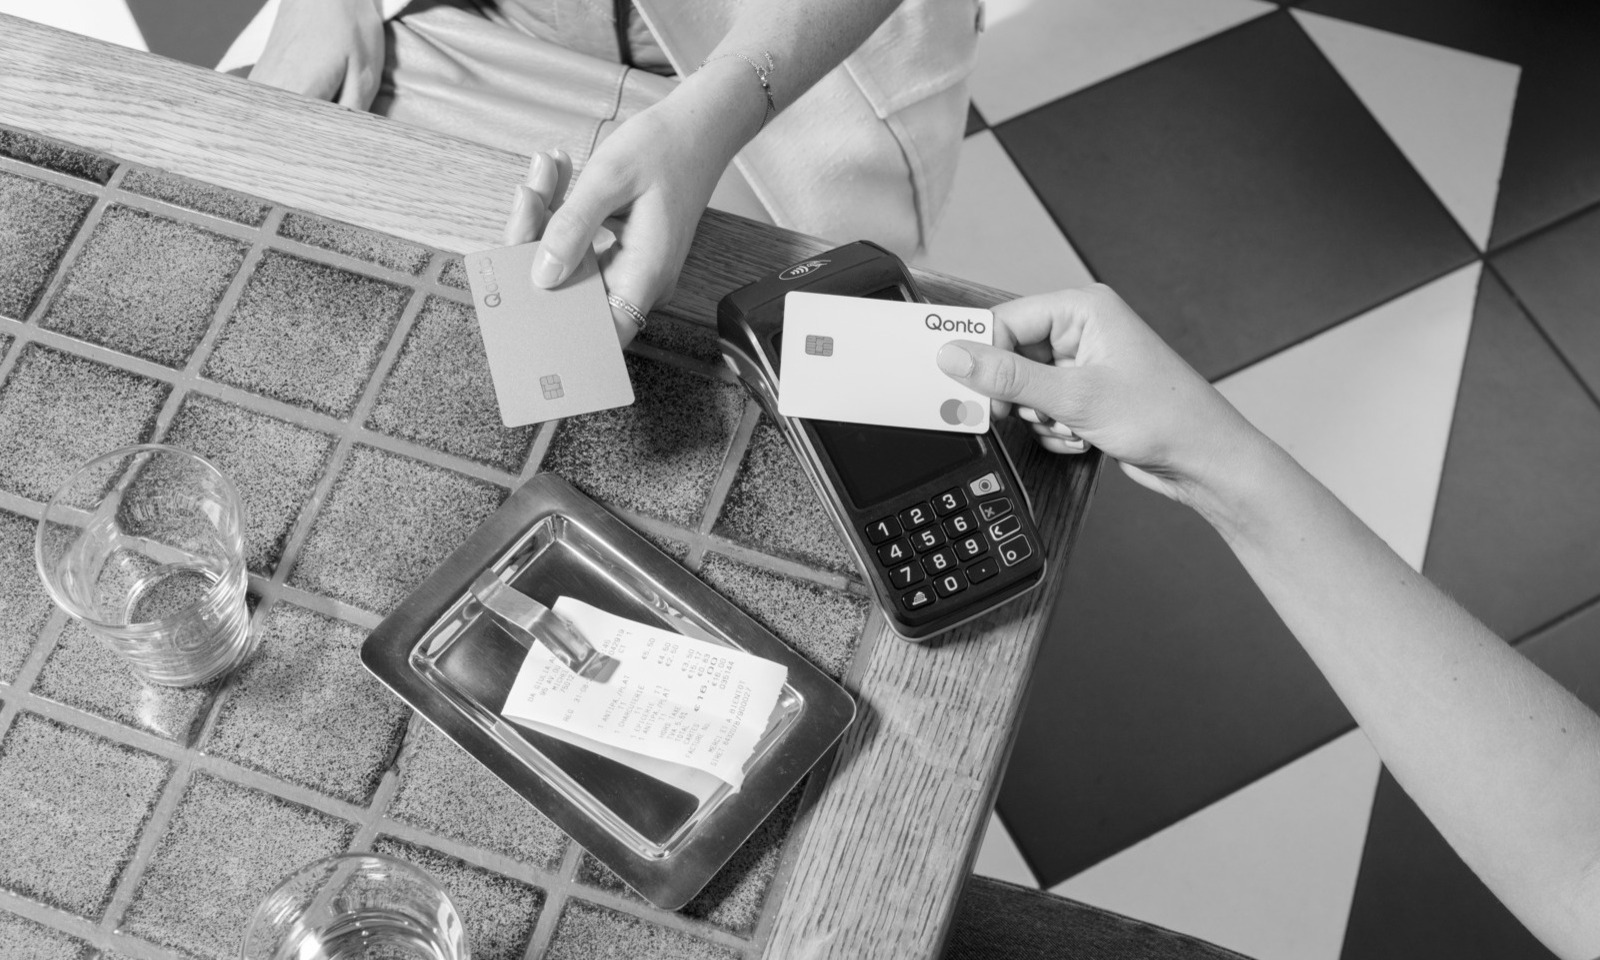 qonto-card-payments